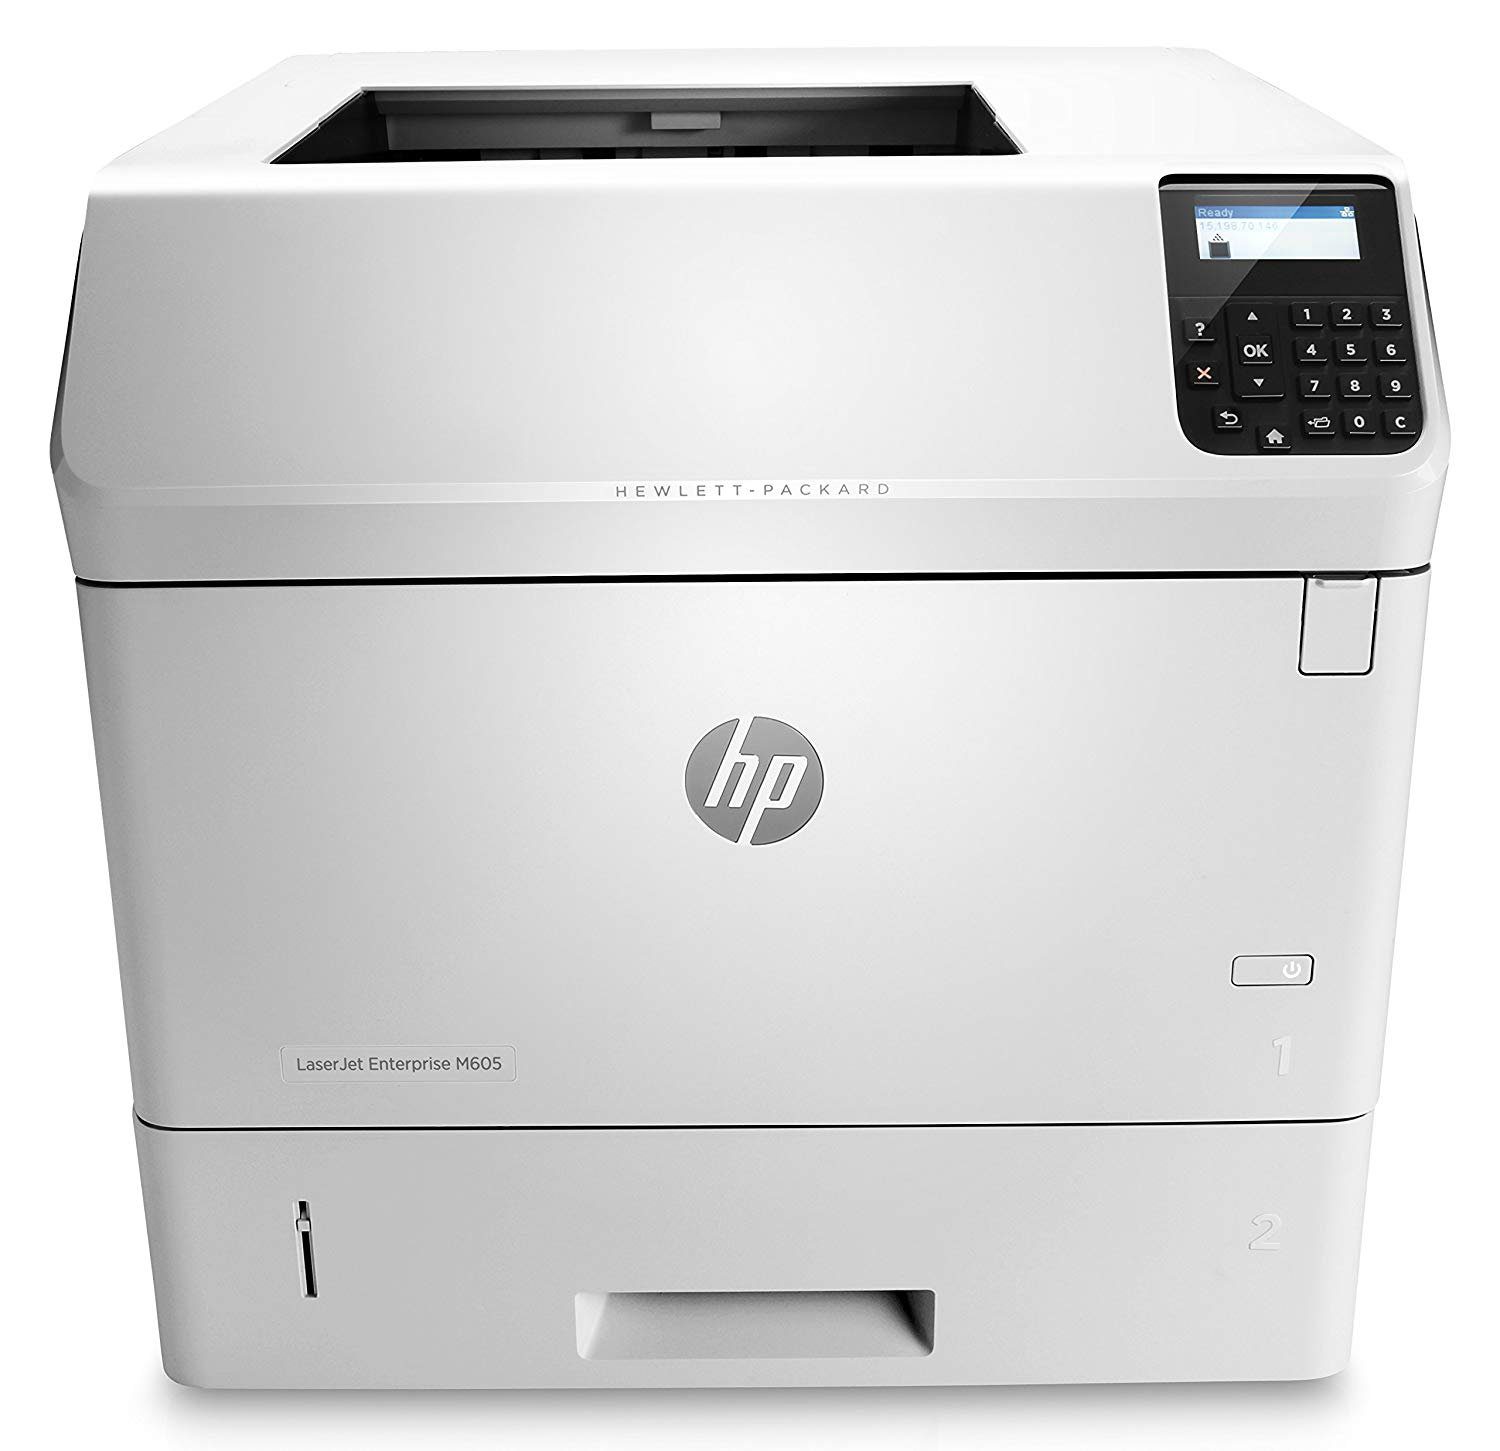 HP LaserJet Enterprise m605n Professional printer for large workgroups